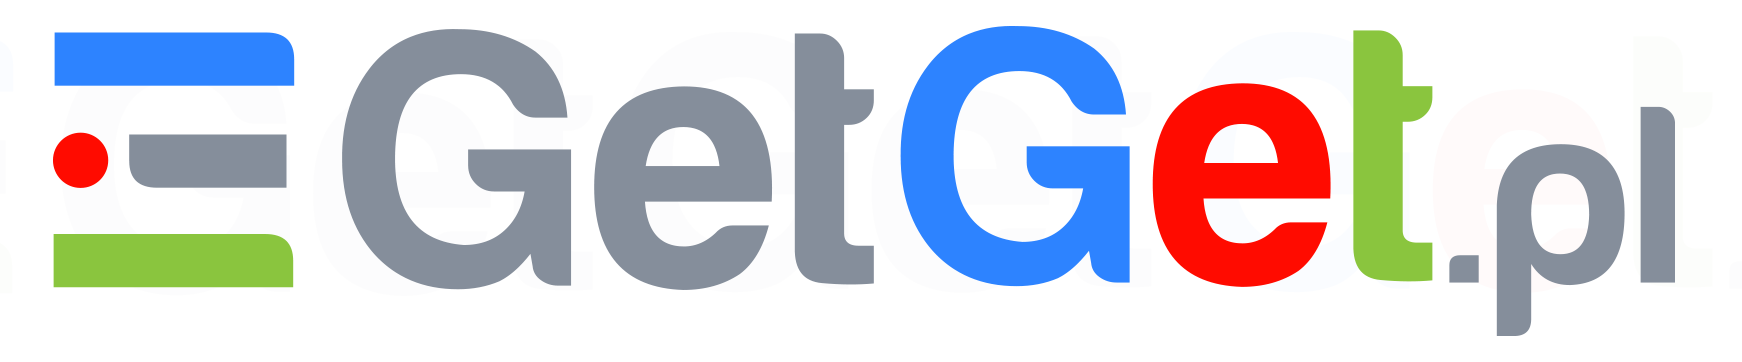 getGetGet Logo